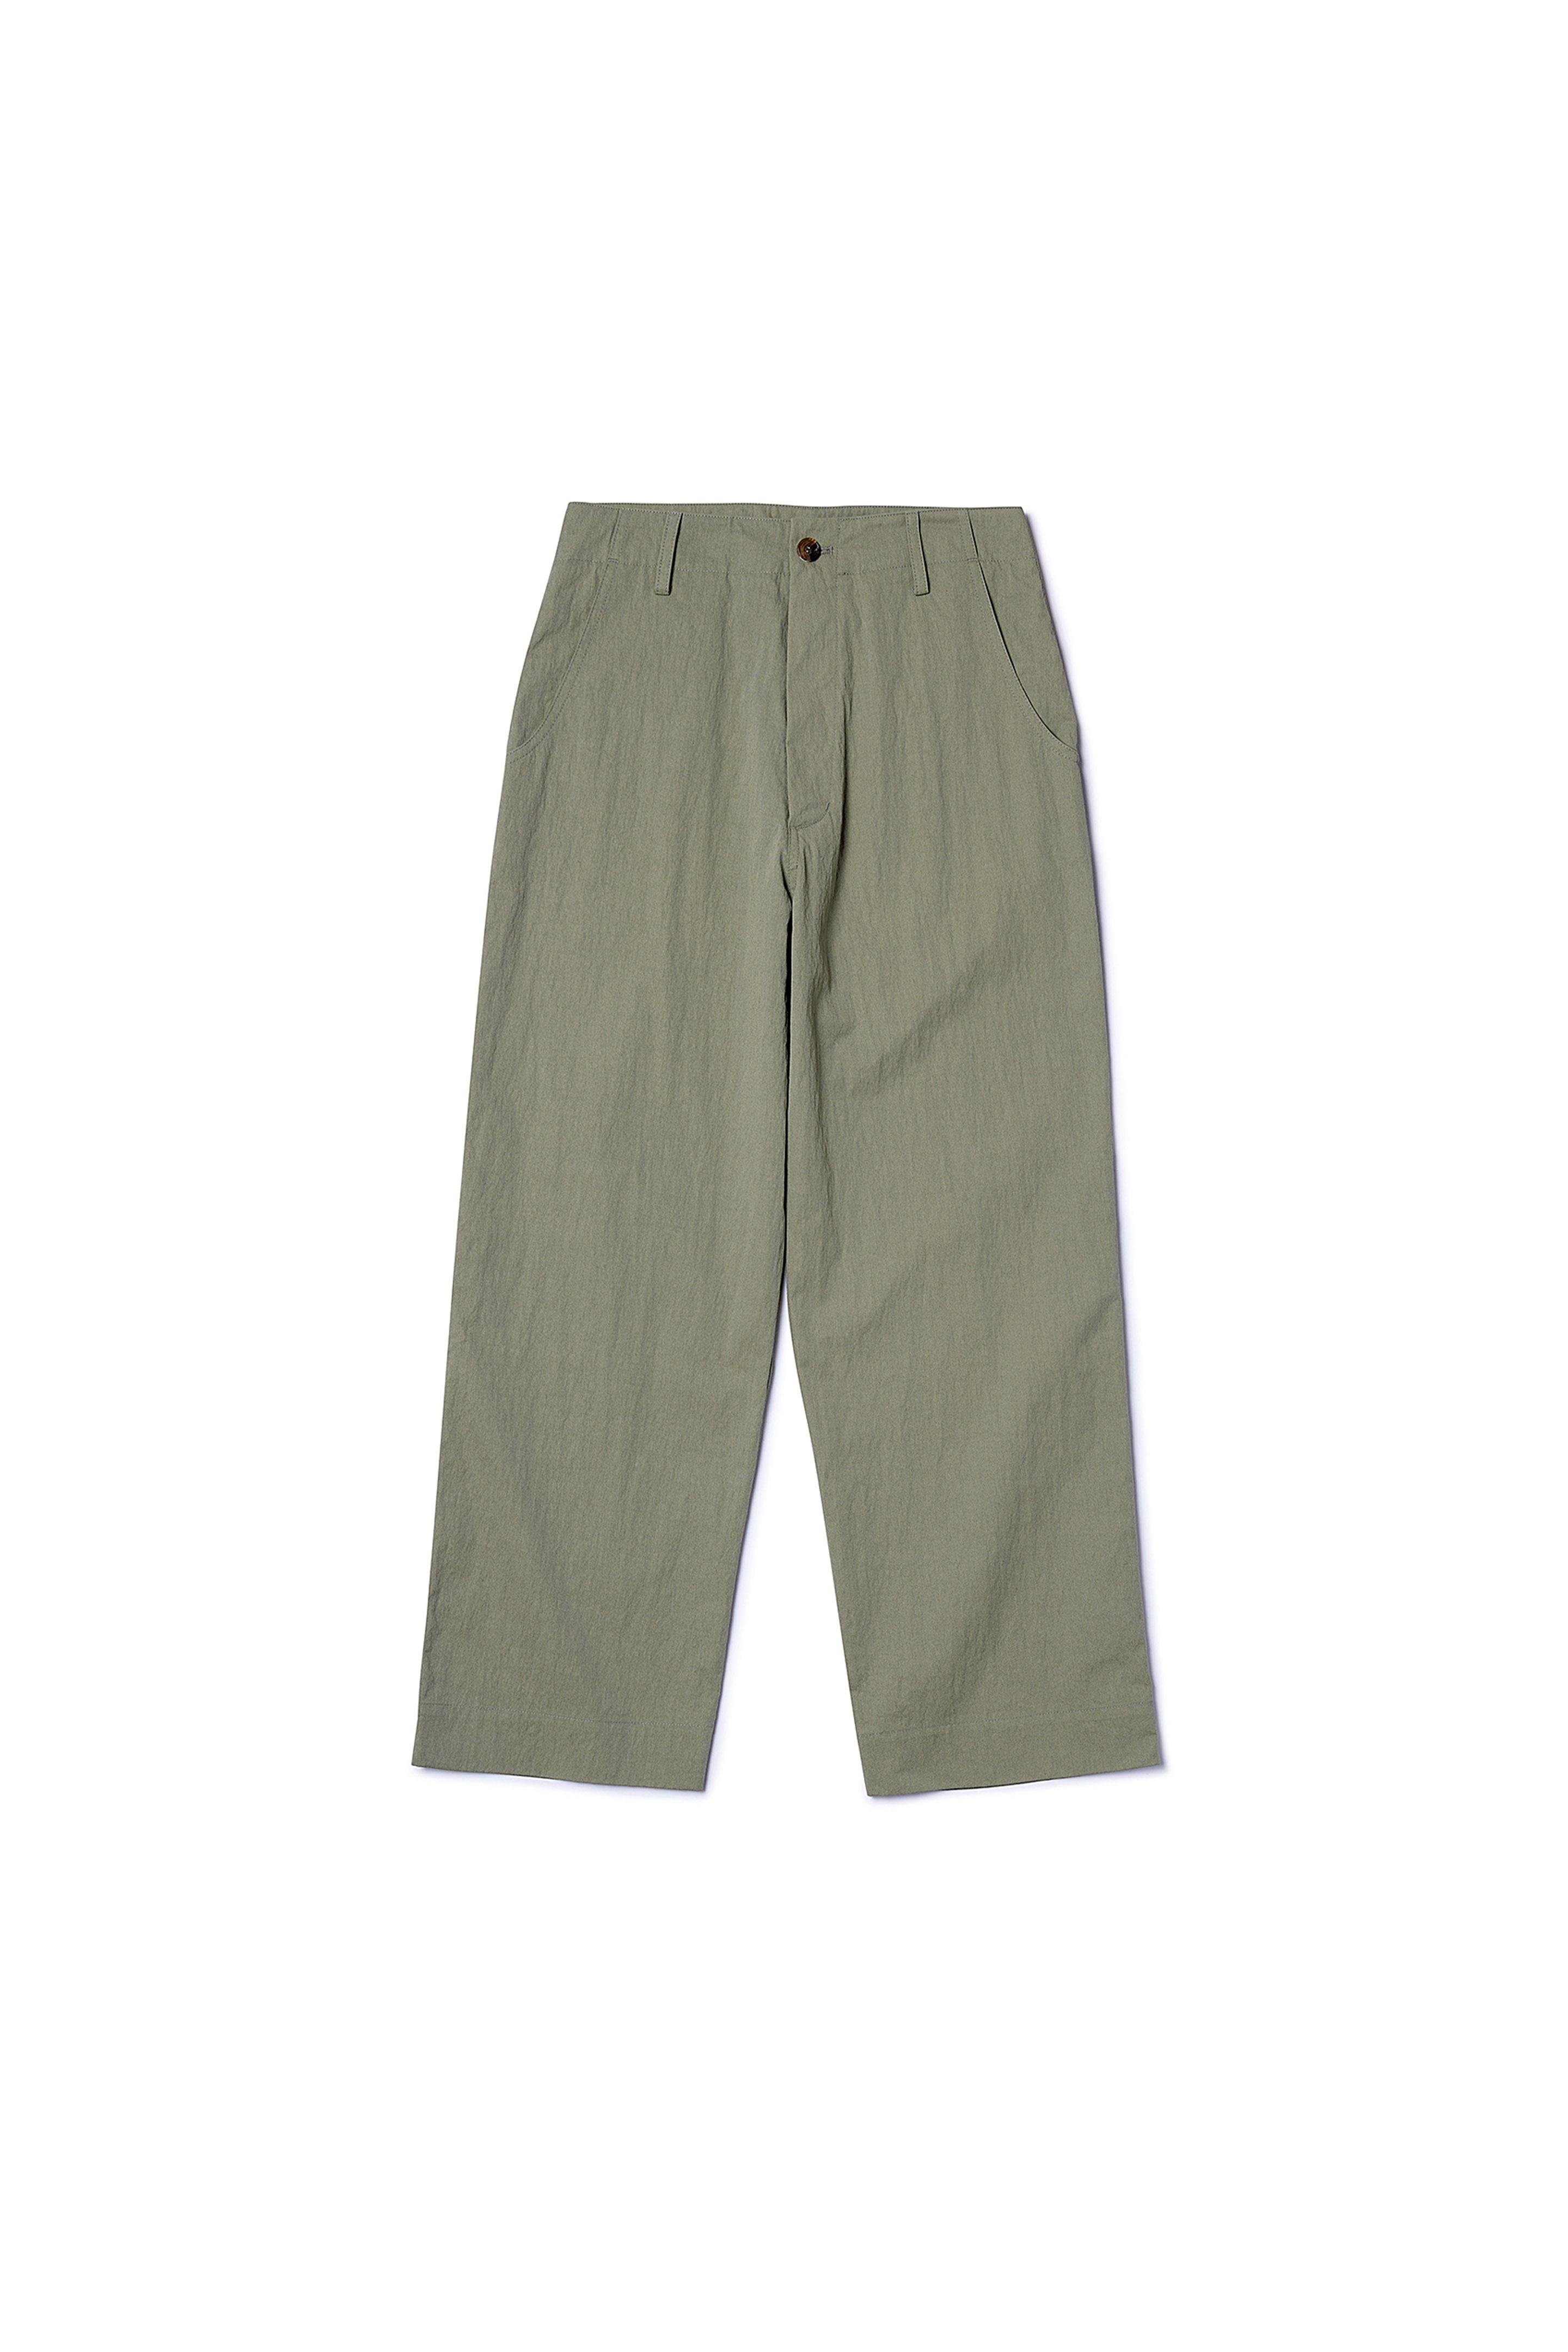 Towpath 003 Easy Cotton Pants (Khaki)